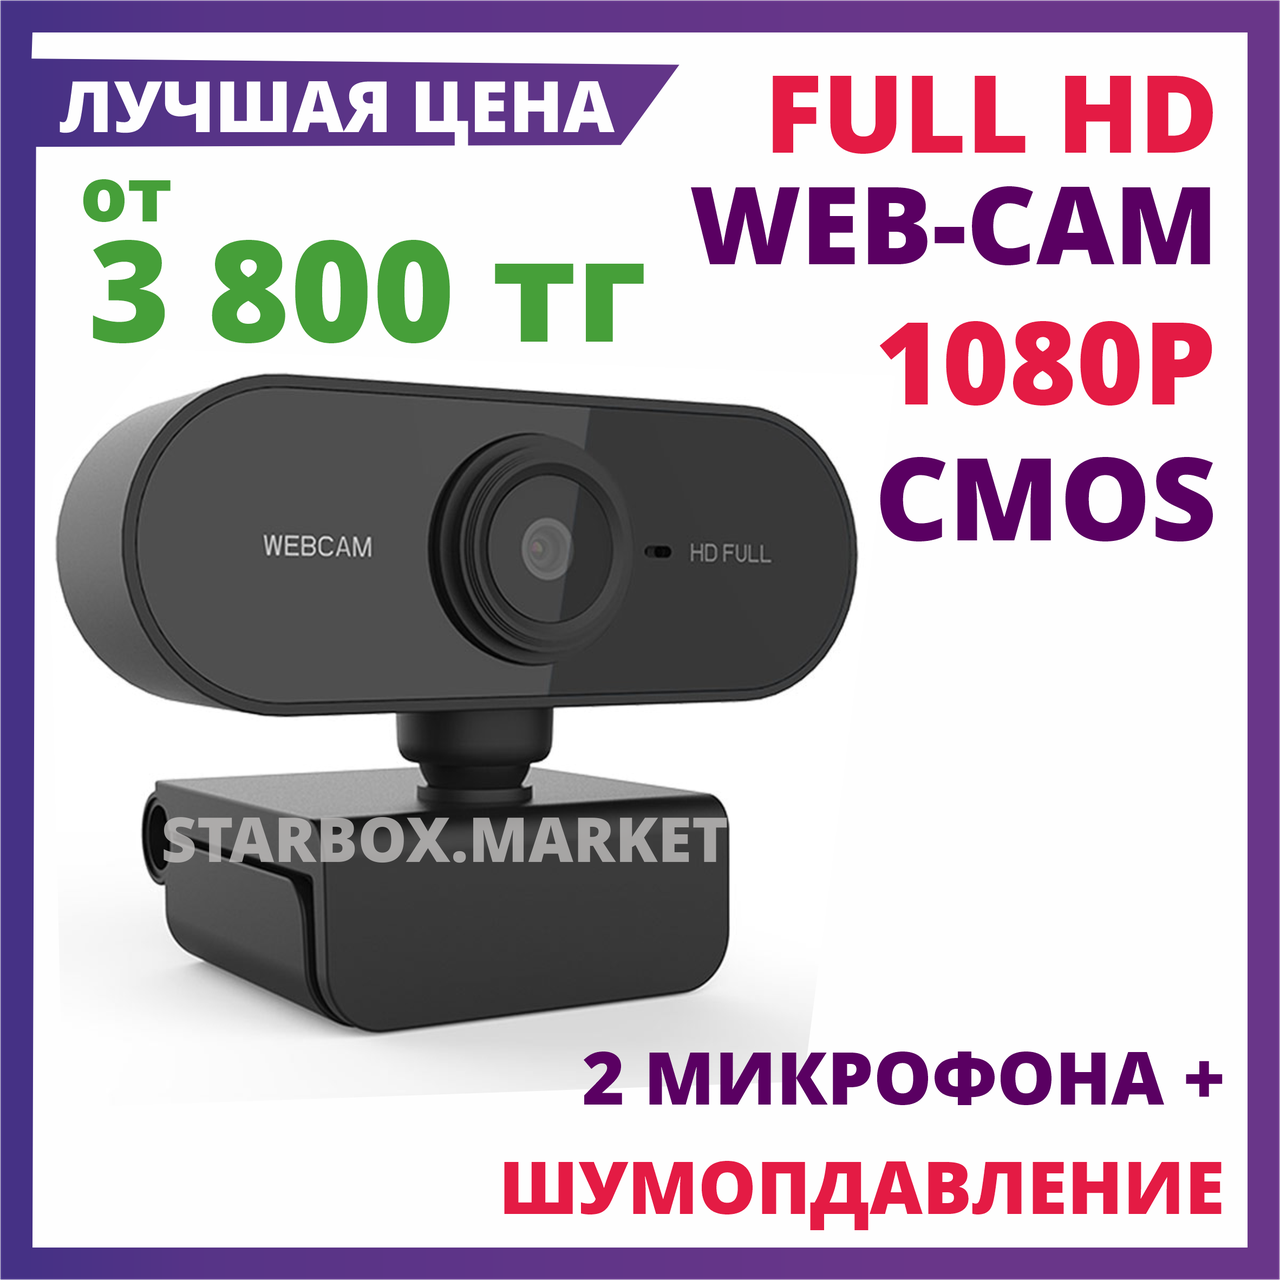 Веб камера с микрофоном 1080P, интернет HD web камера для ПК компьютера, ноутбука USB Plug n Play стрим камера, фото 1